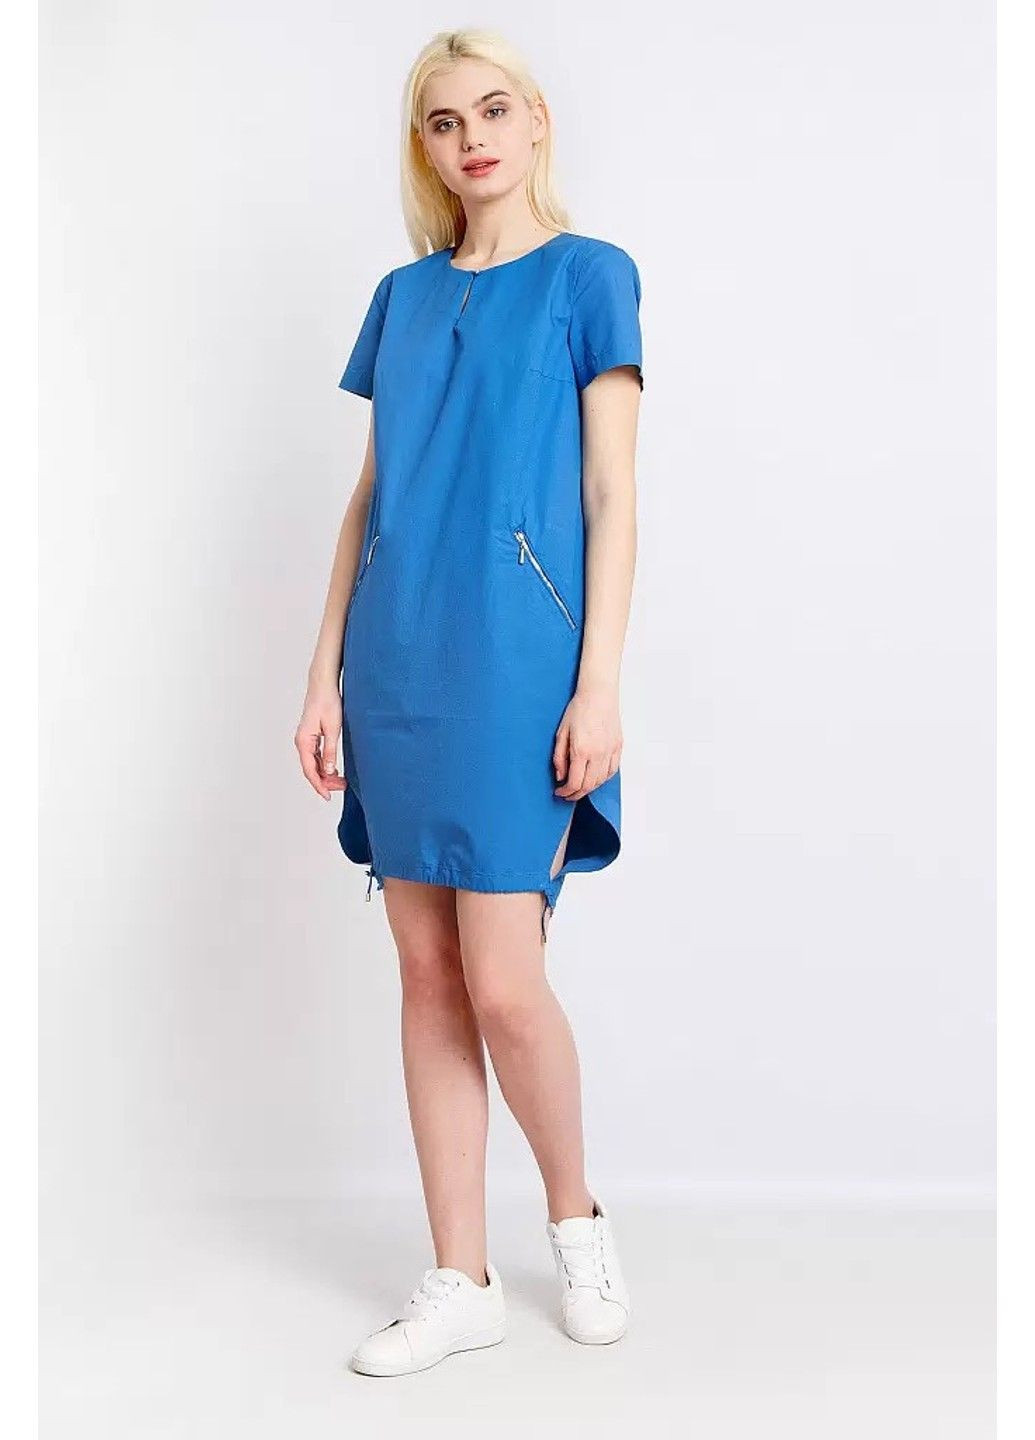 Синее кэжуал платье s18-32035-110 а-силуэт Finn Flare однотонное